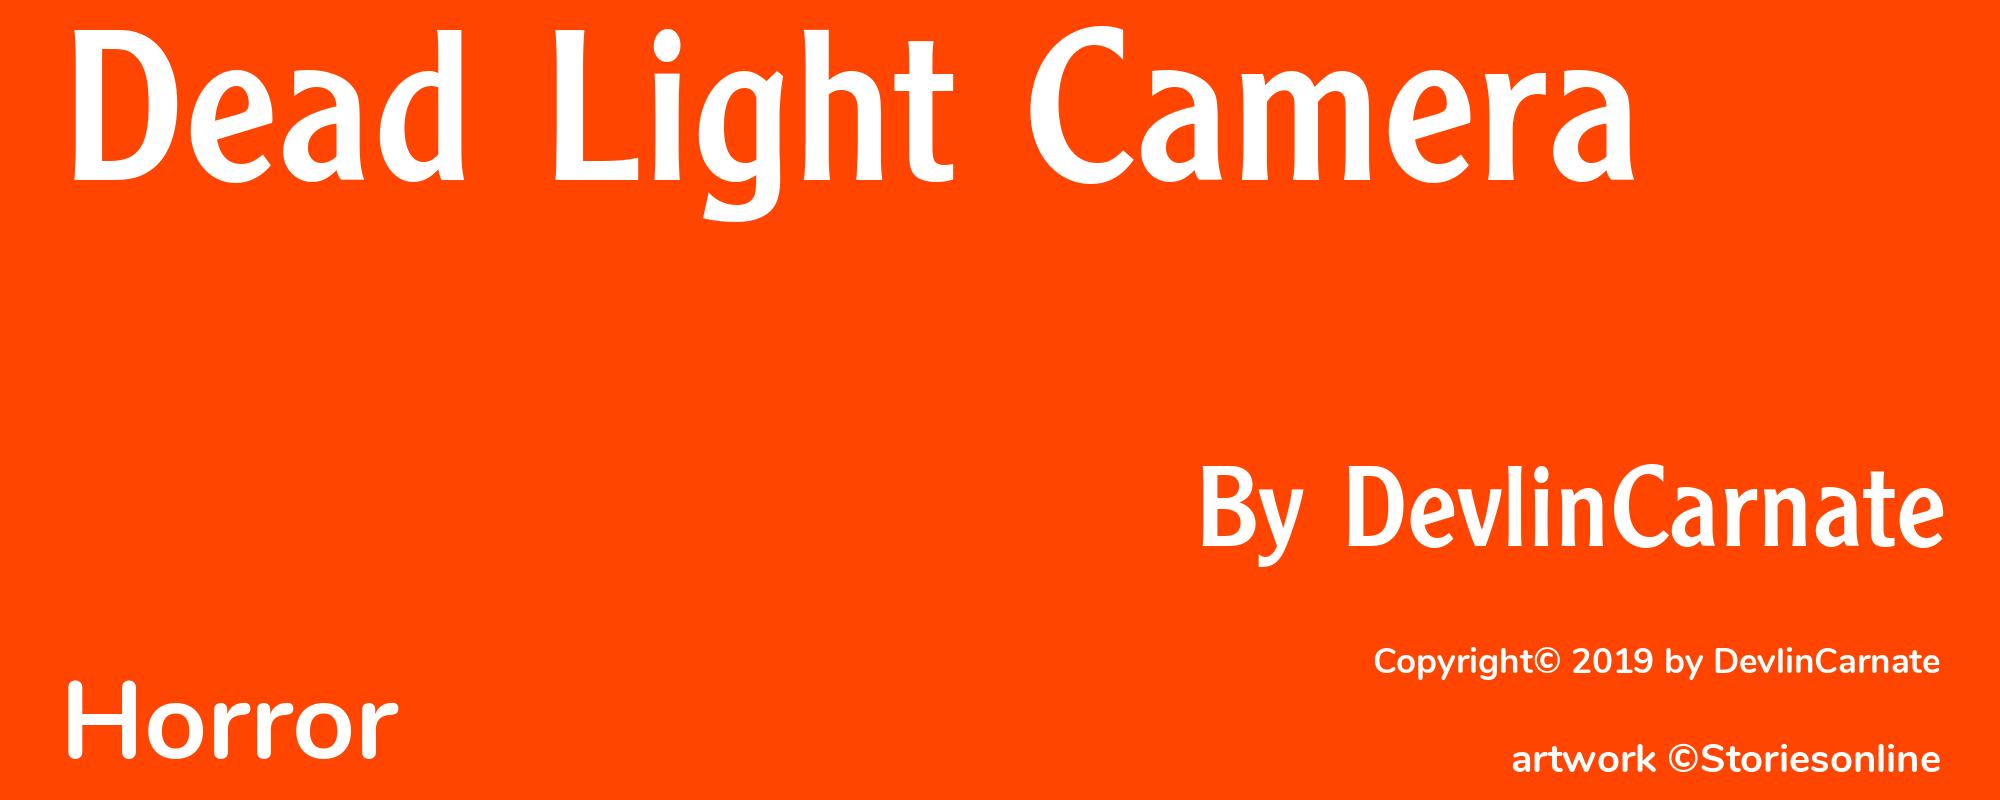 Dead Light Camera - Cover